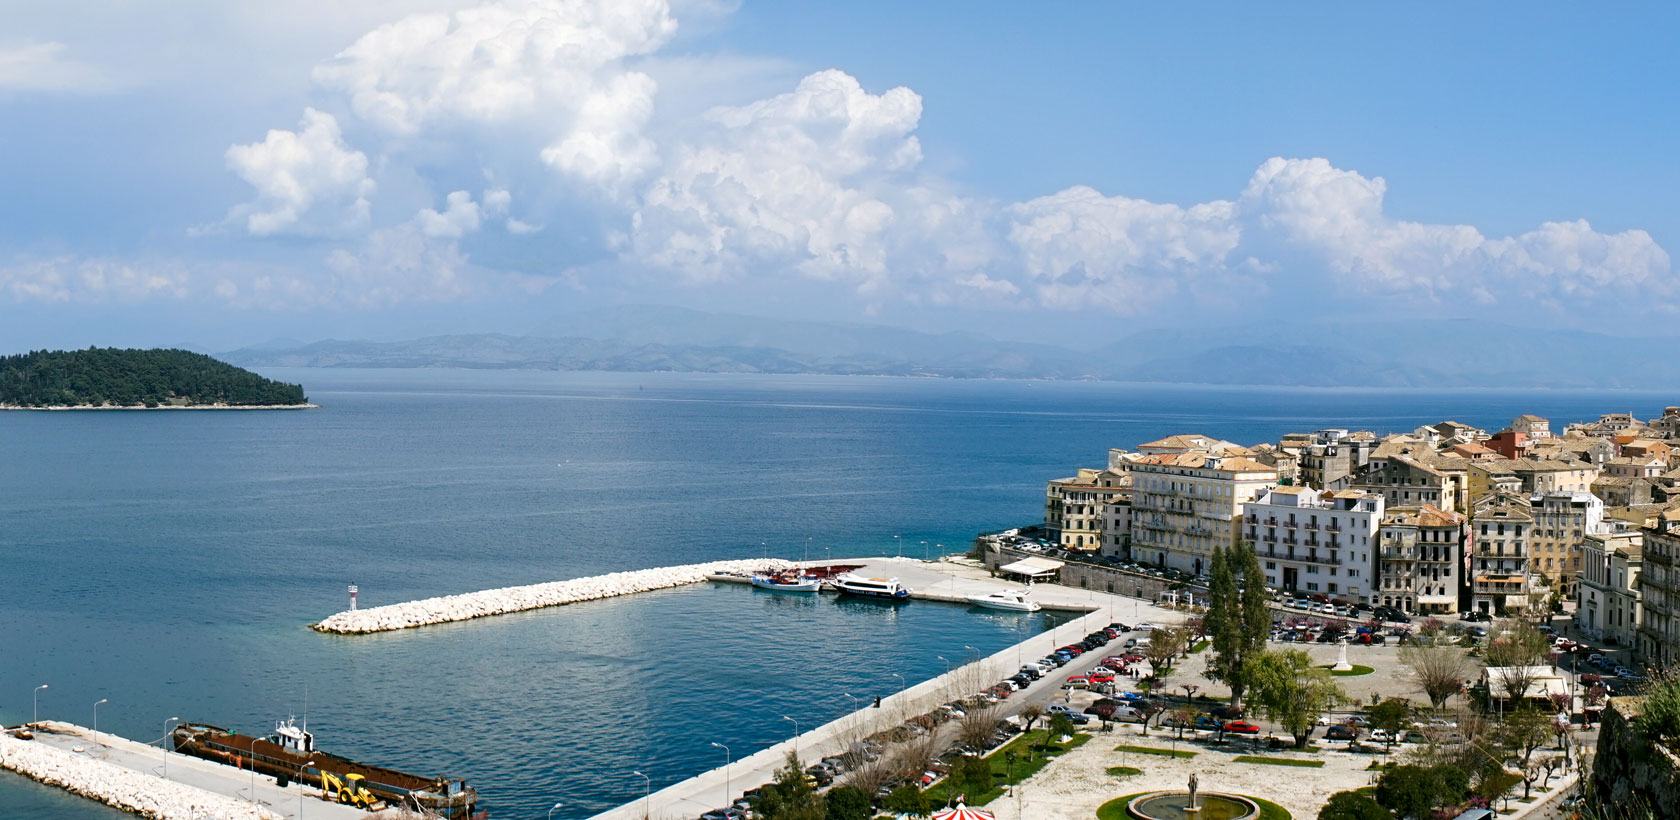 Corfu Town New Port